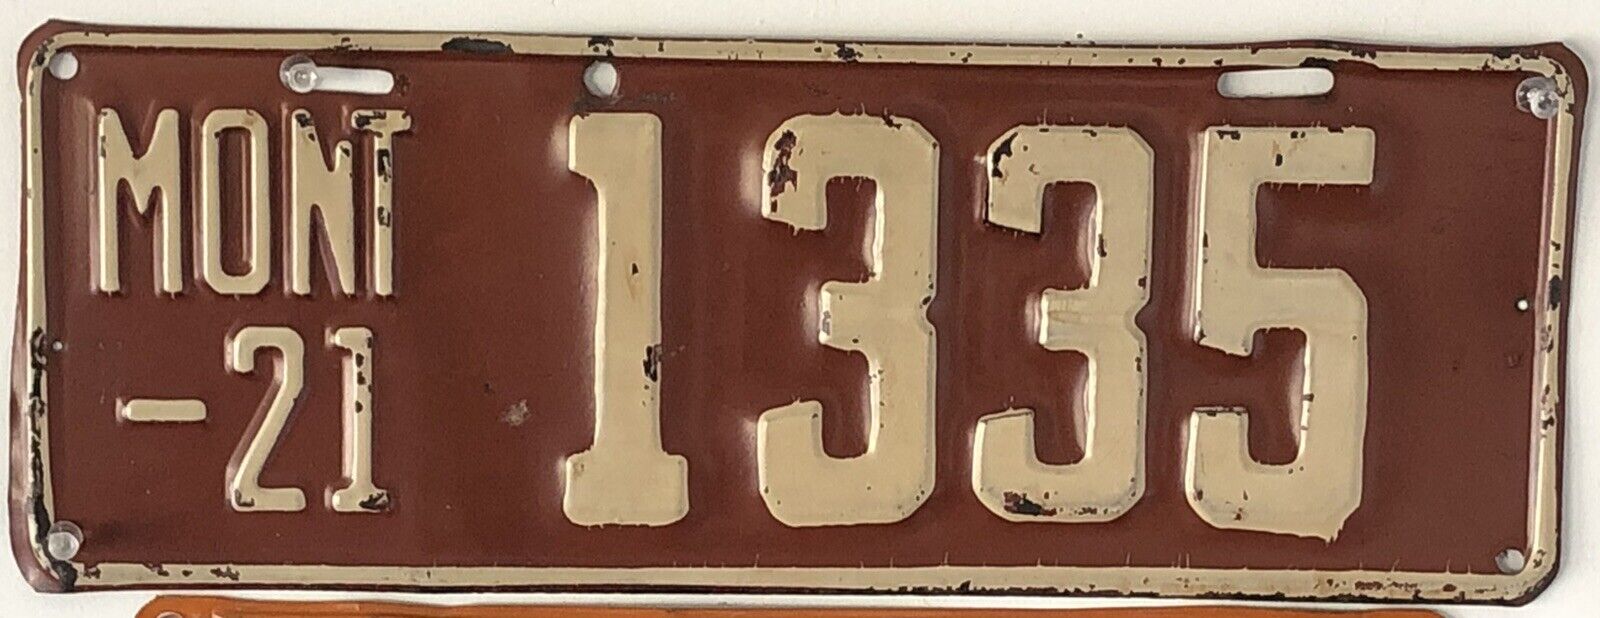 1921 Montana License Plate VERY NICE COMPLETELY ORIGINAL 4 Digit